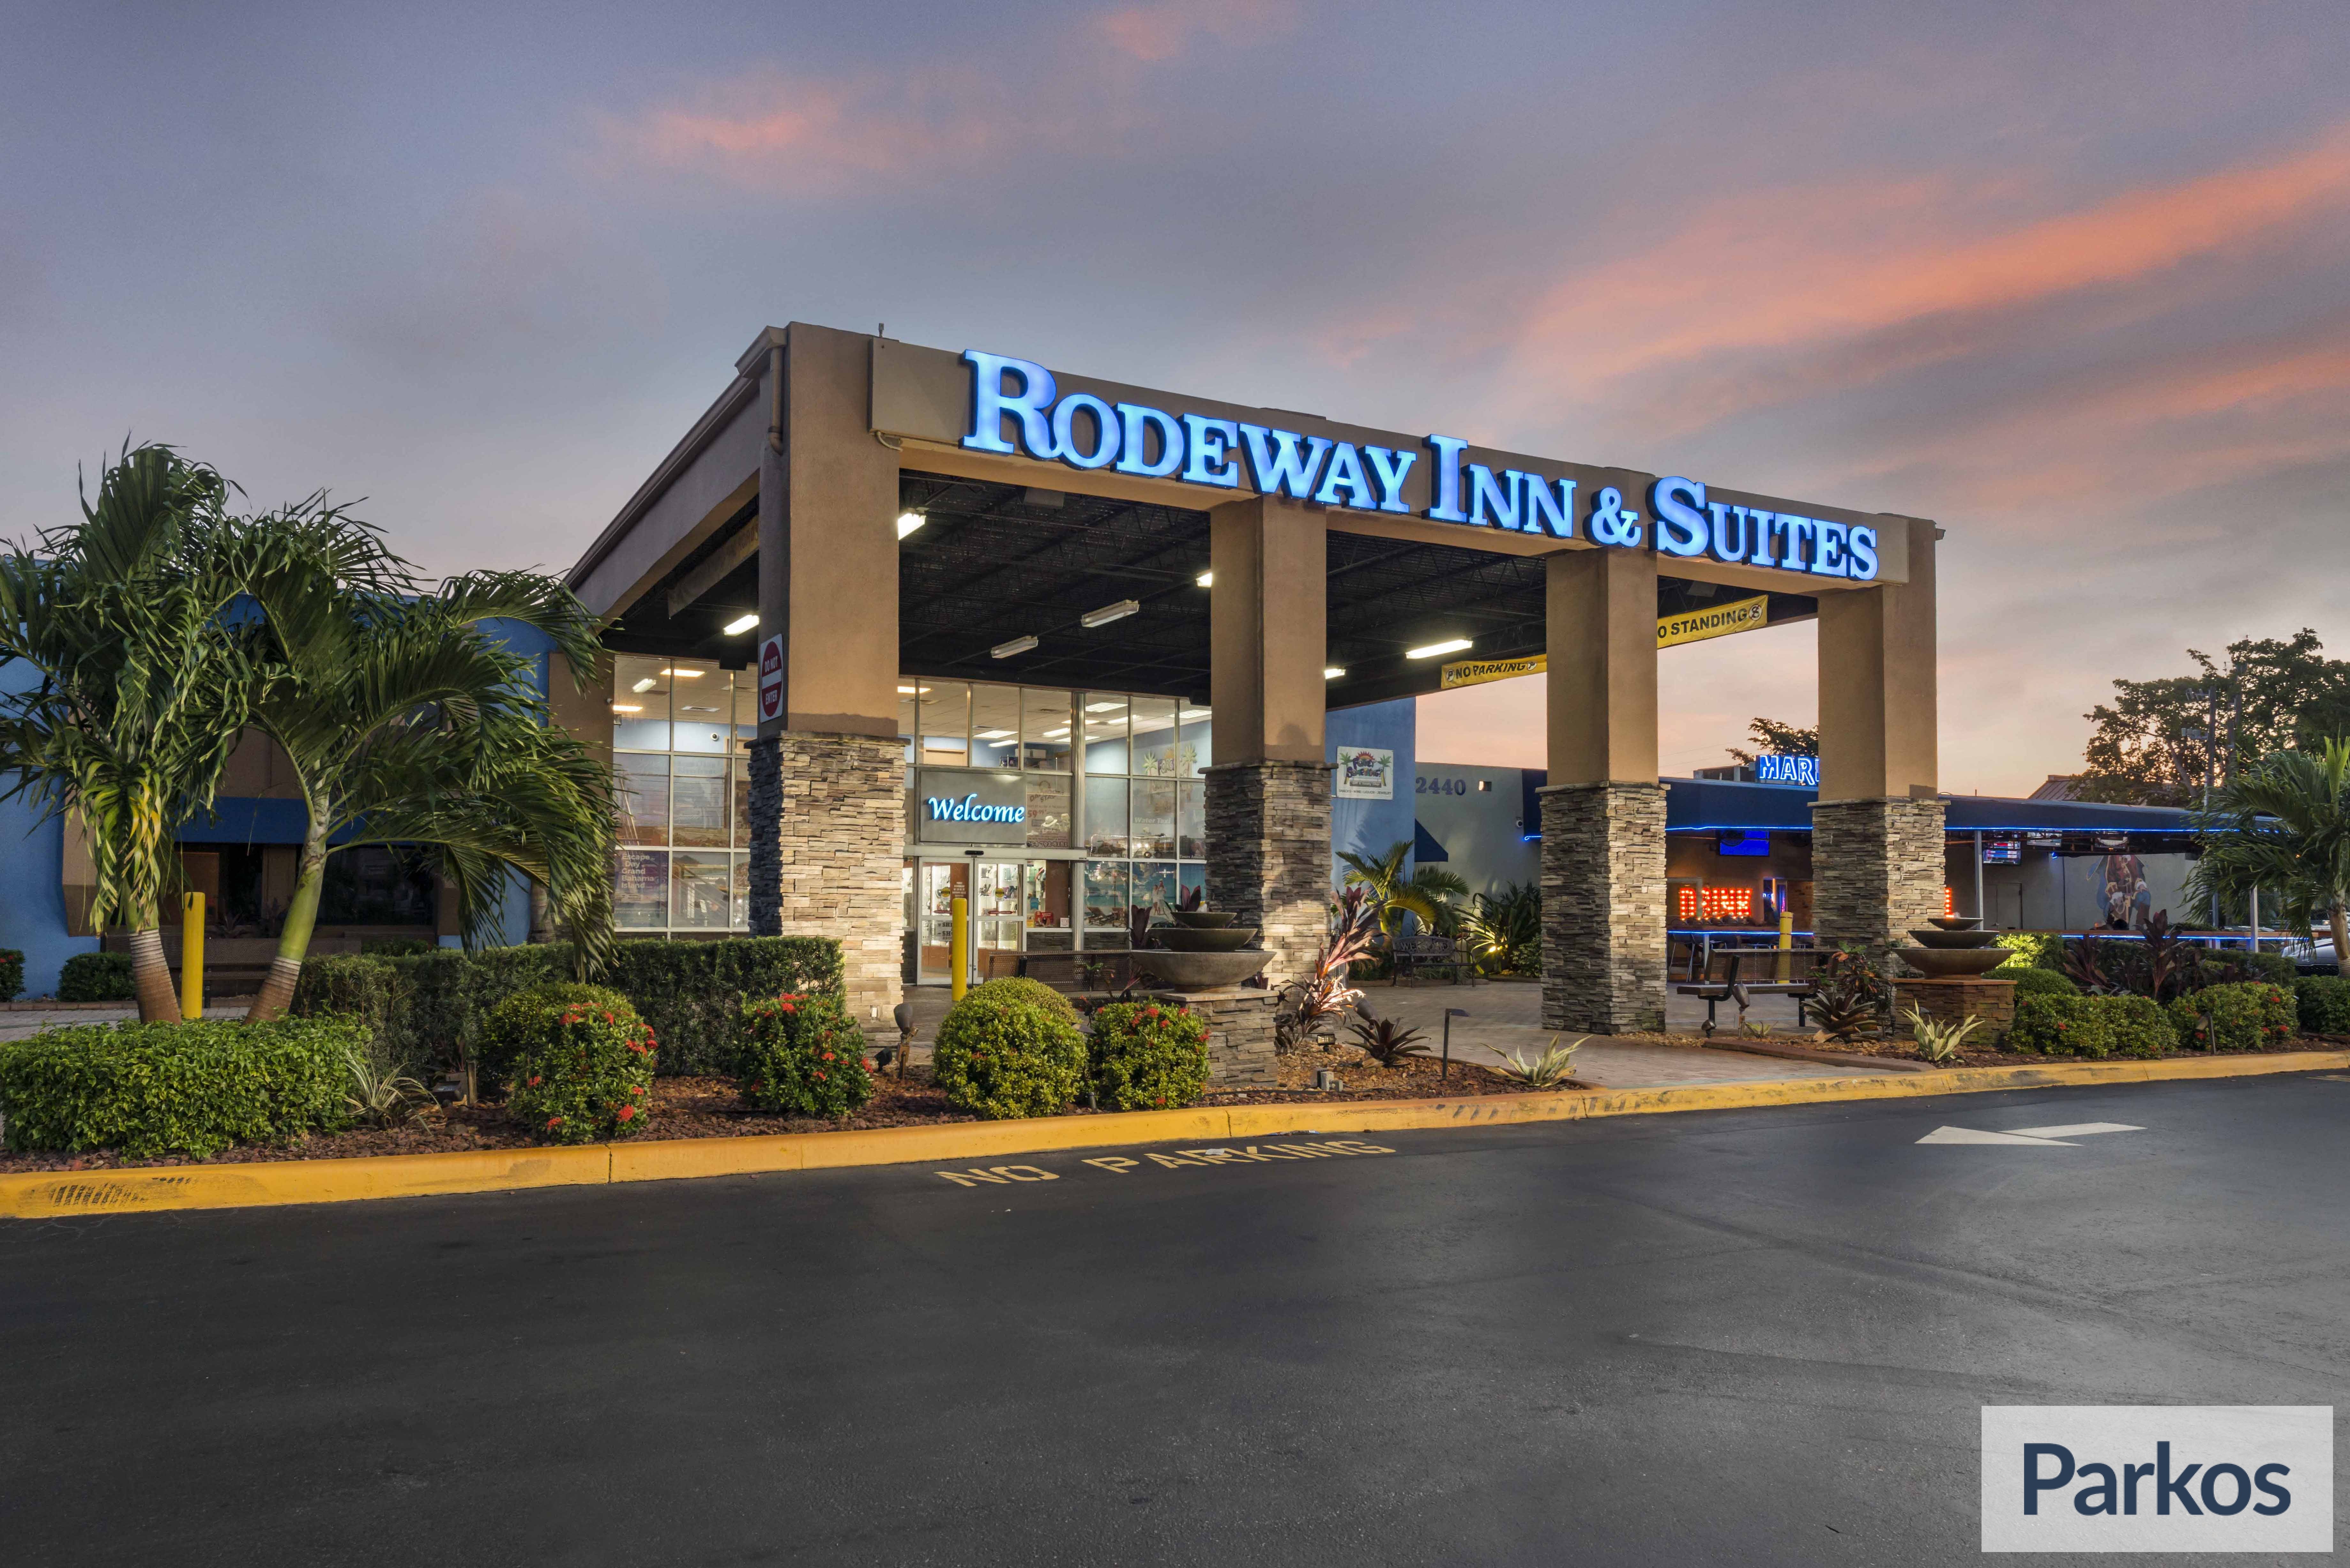 Rodeway Inn & Suites FLL Airport Parking - Fort Lauderdale Airport Parking - picture 1